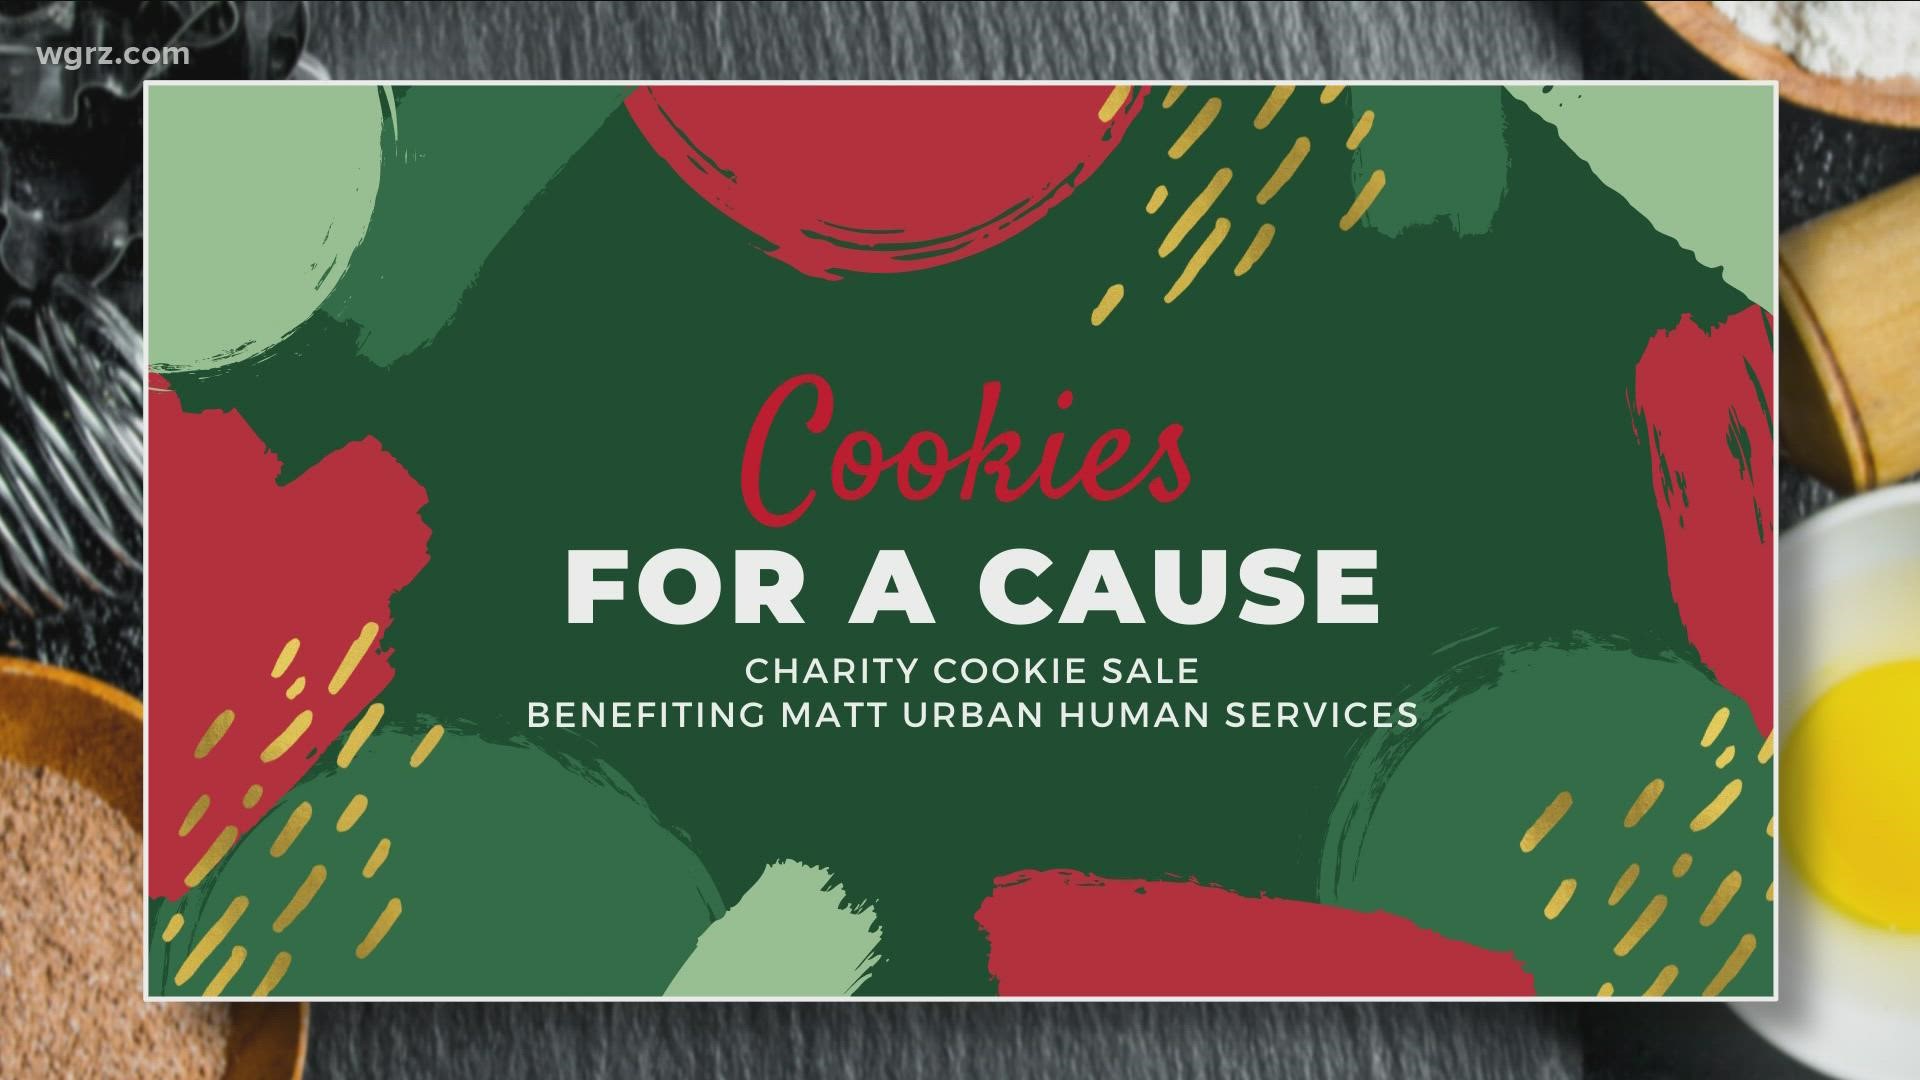 The charity cookie sale benefits Matt Urban Human Services.